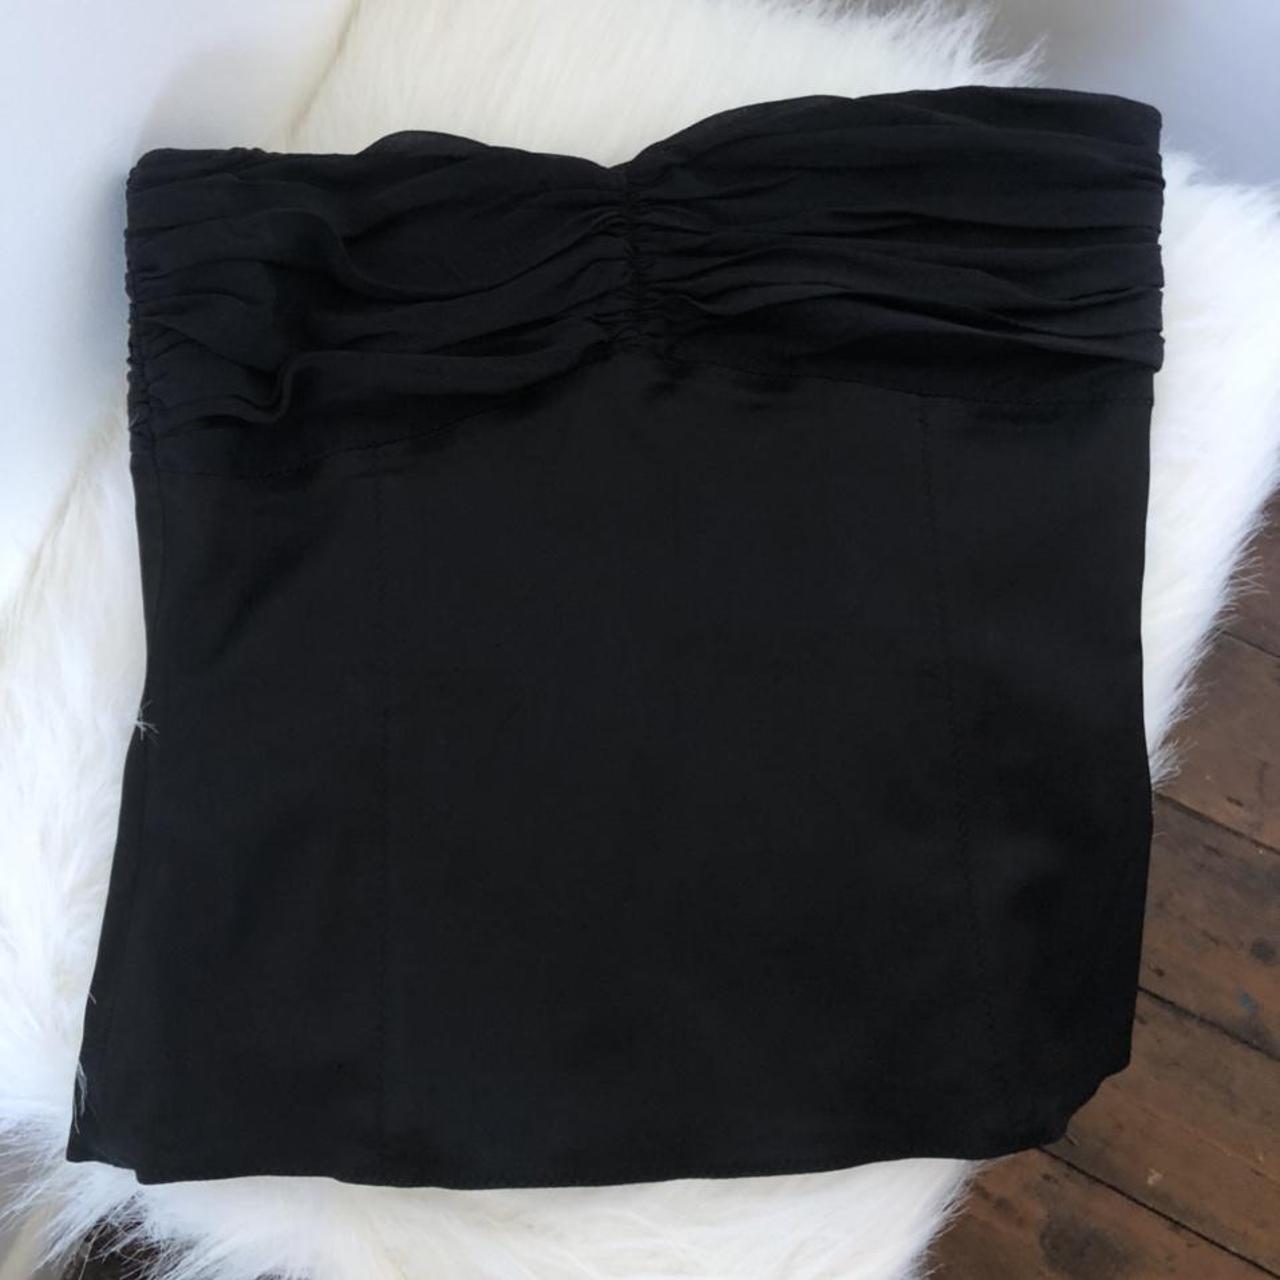 Vintage 90s black corset top with boned structure. - Depop